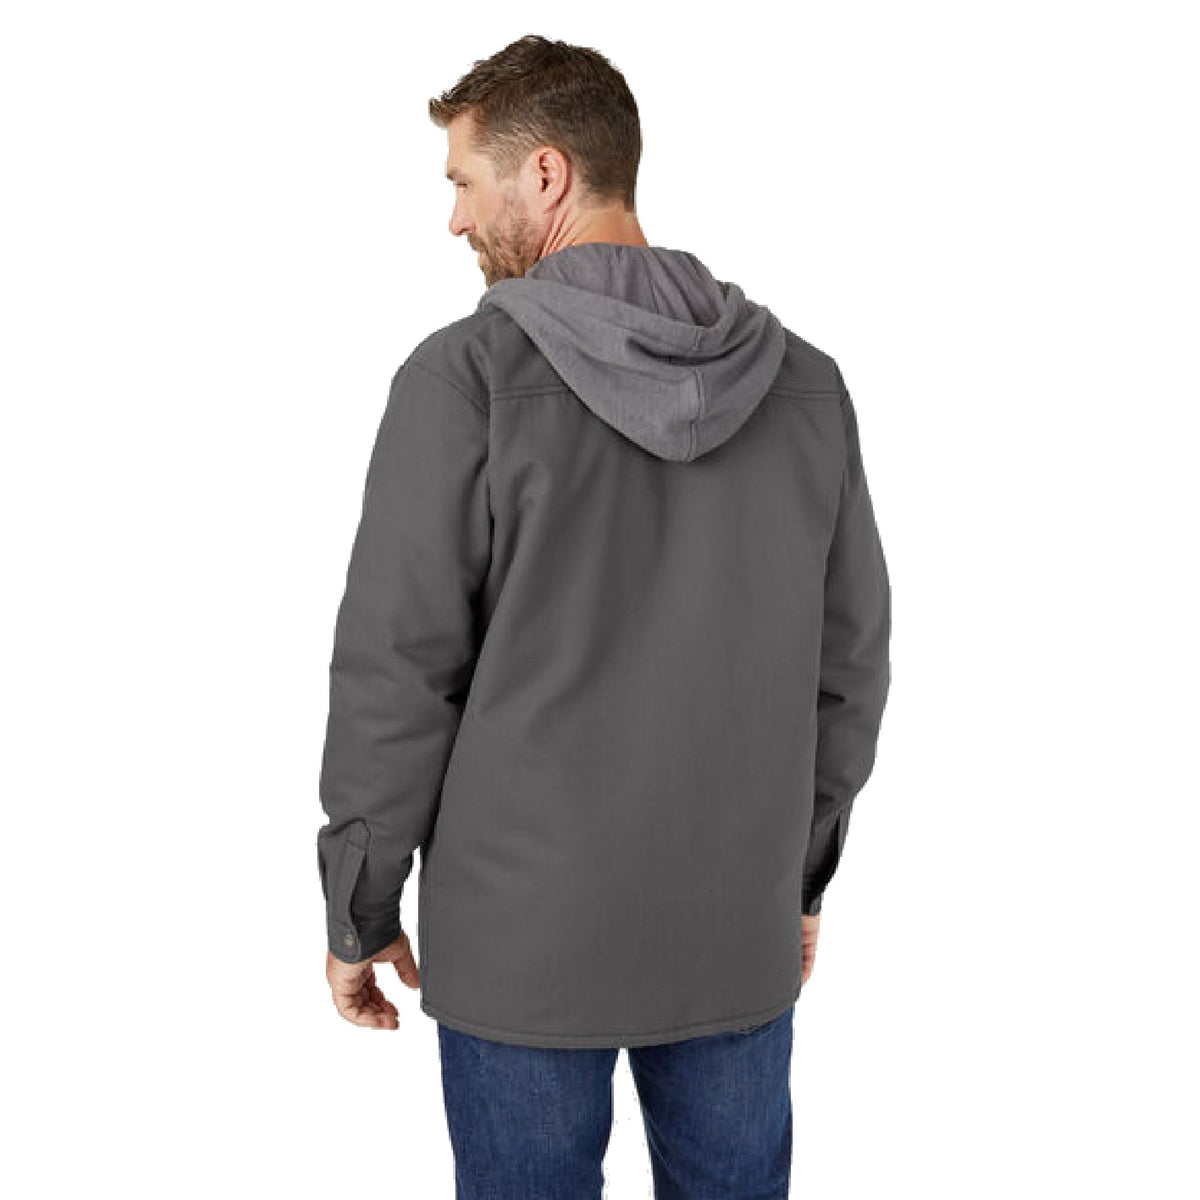 Fleece Hooded Duck Shirt Jacket with Hydroshield